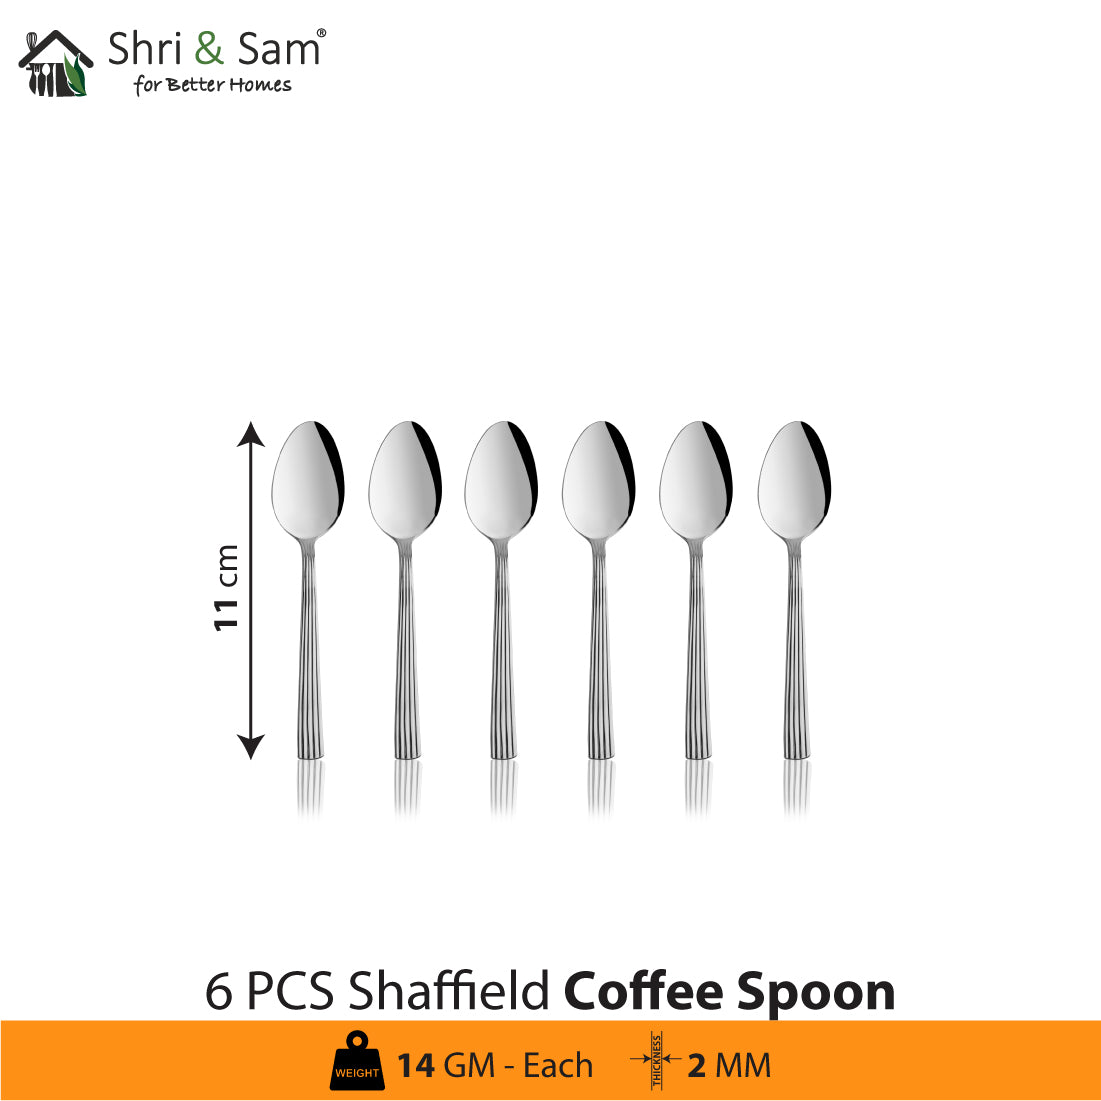 Stainless Steel Cutlery Shaffield